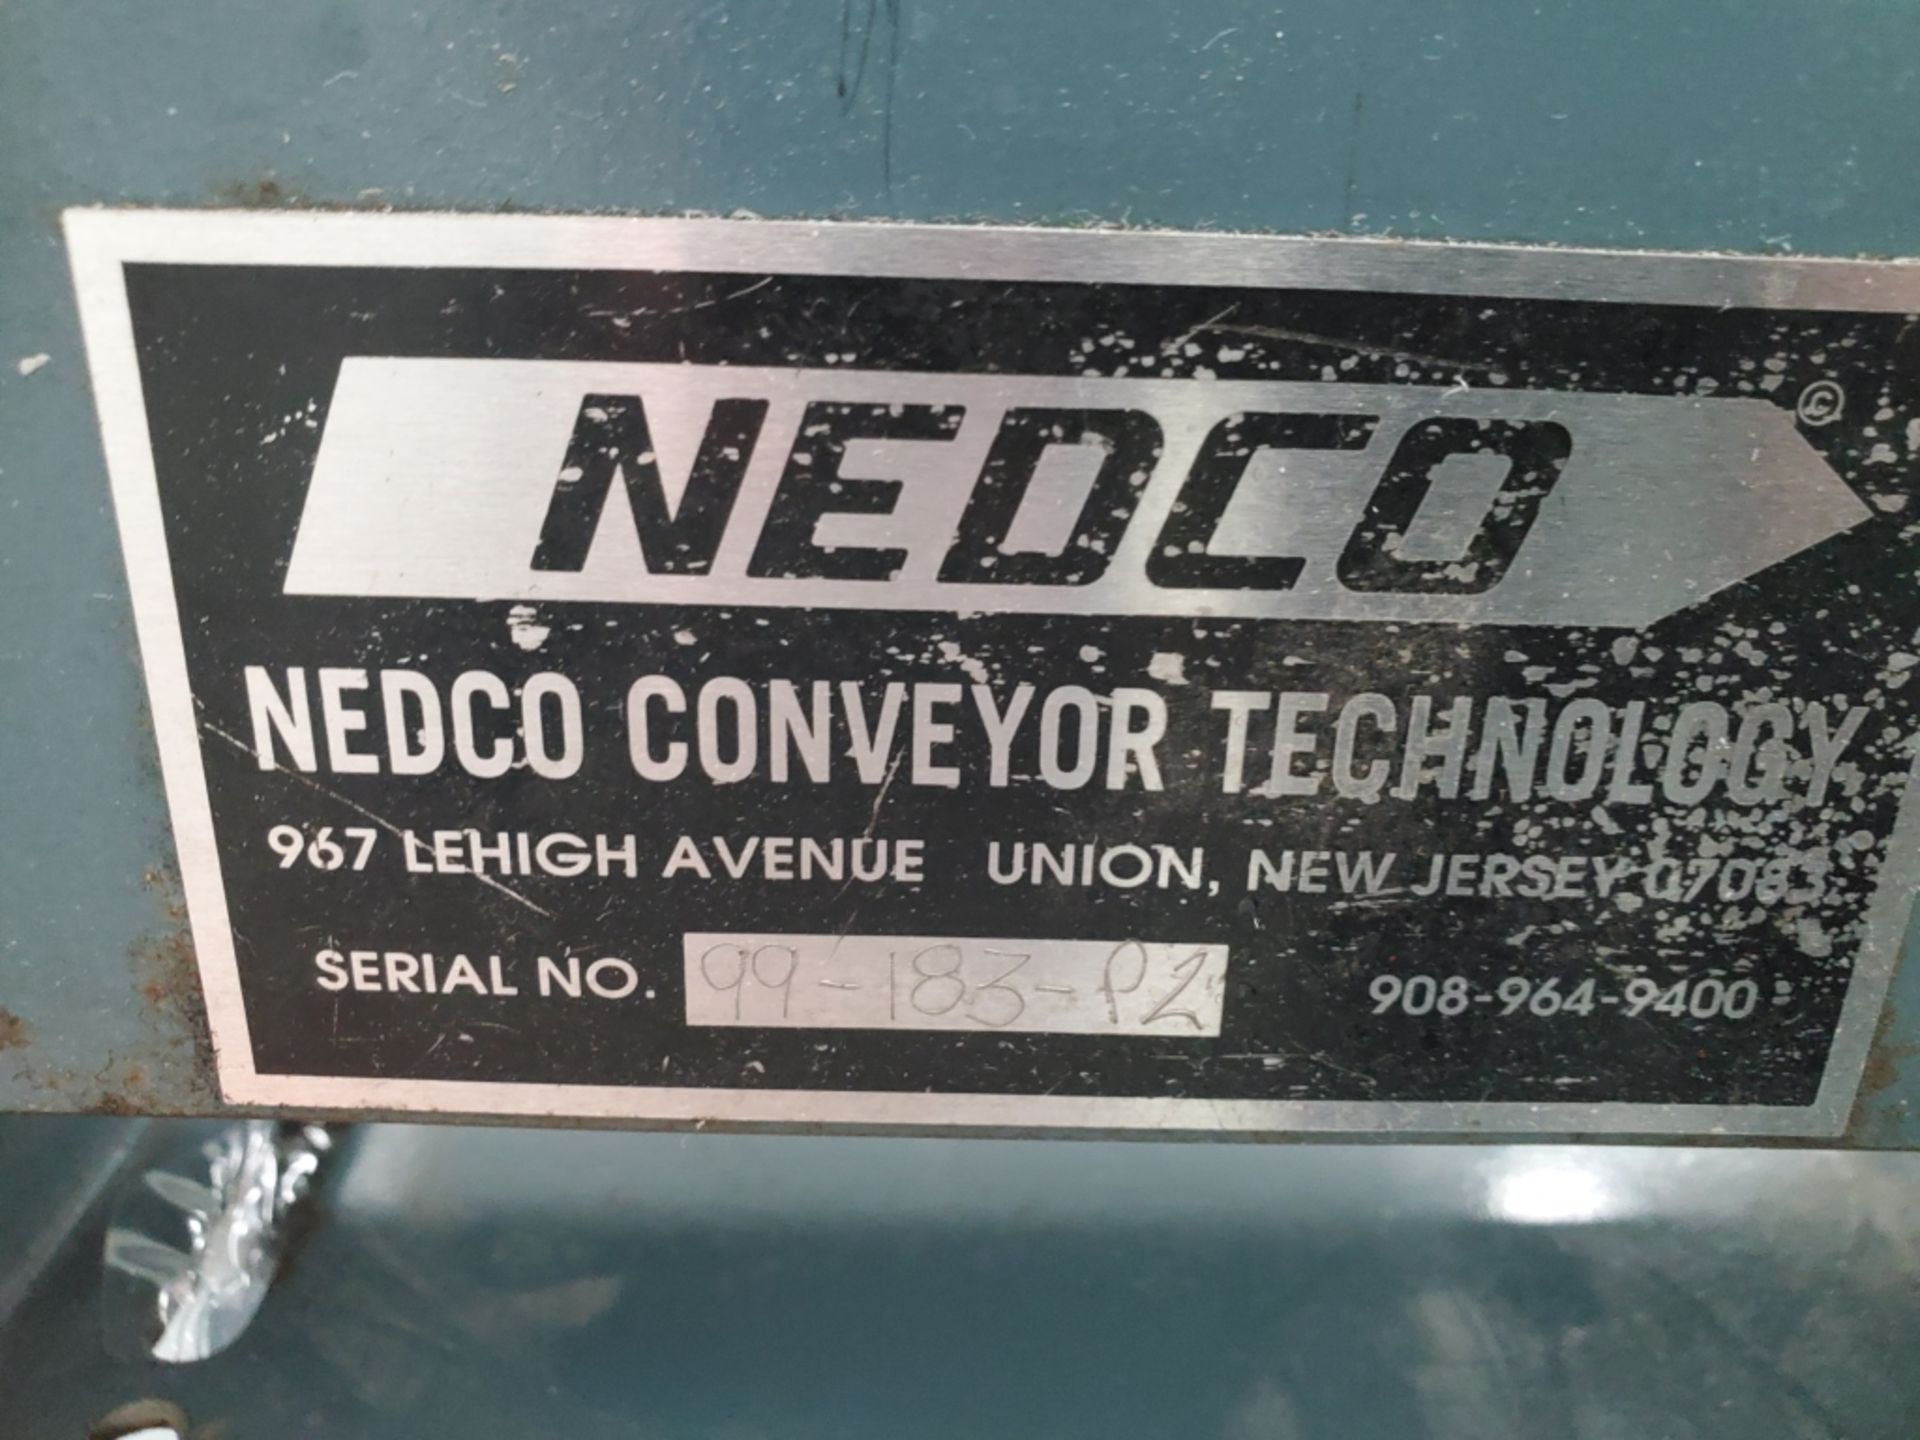 Nedco Conveyor Technology 4"" Carton Transfer Conveyor sn 99-183-P2 - Image 2 of 2